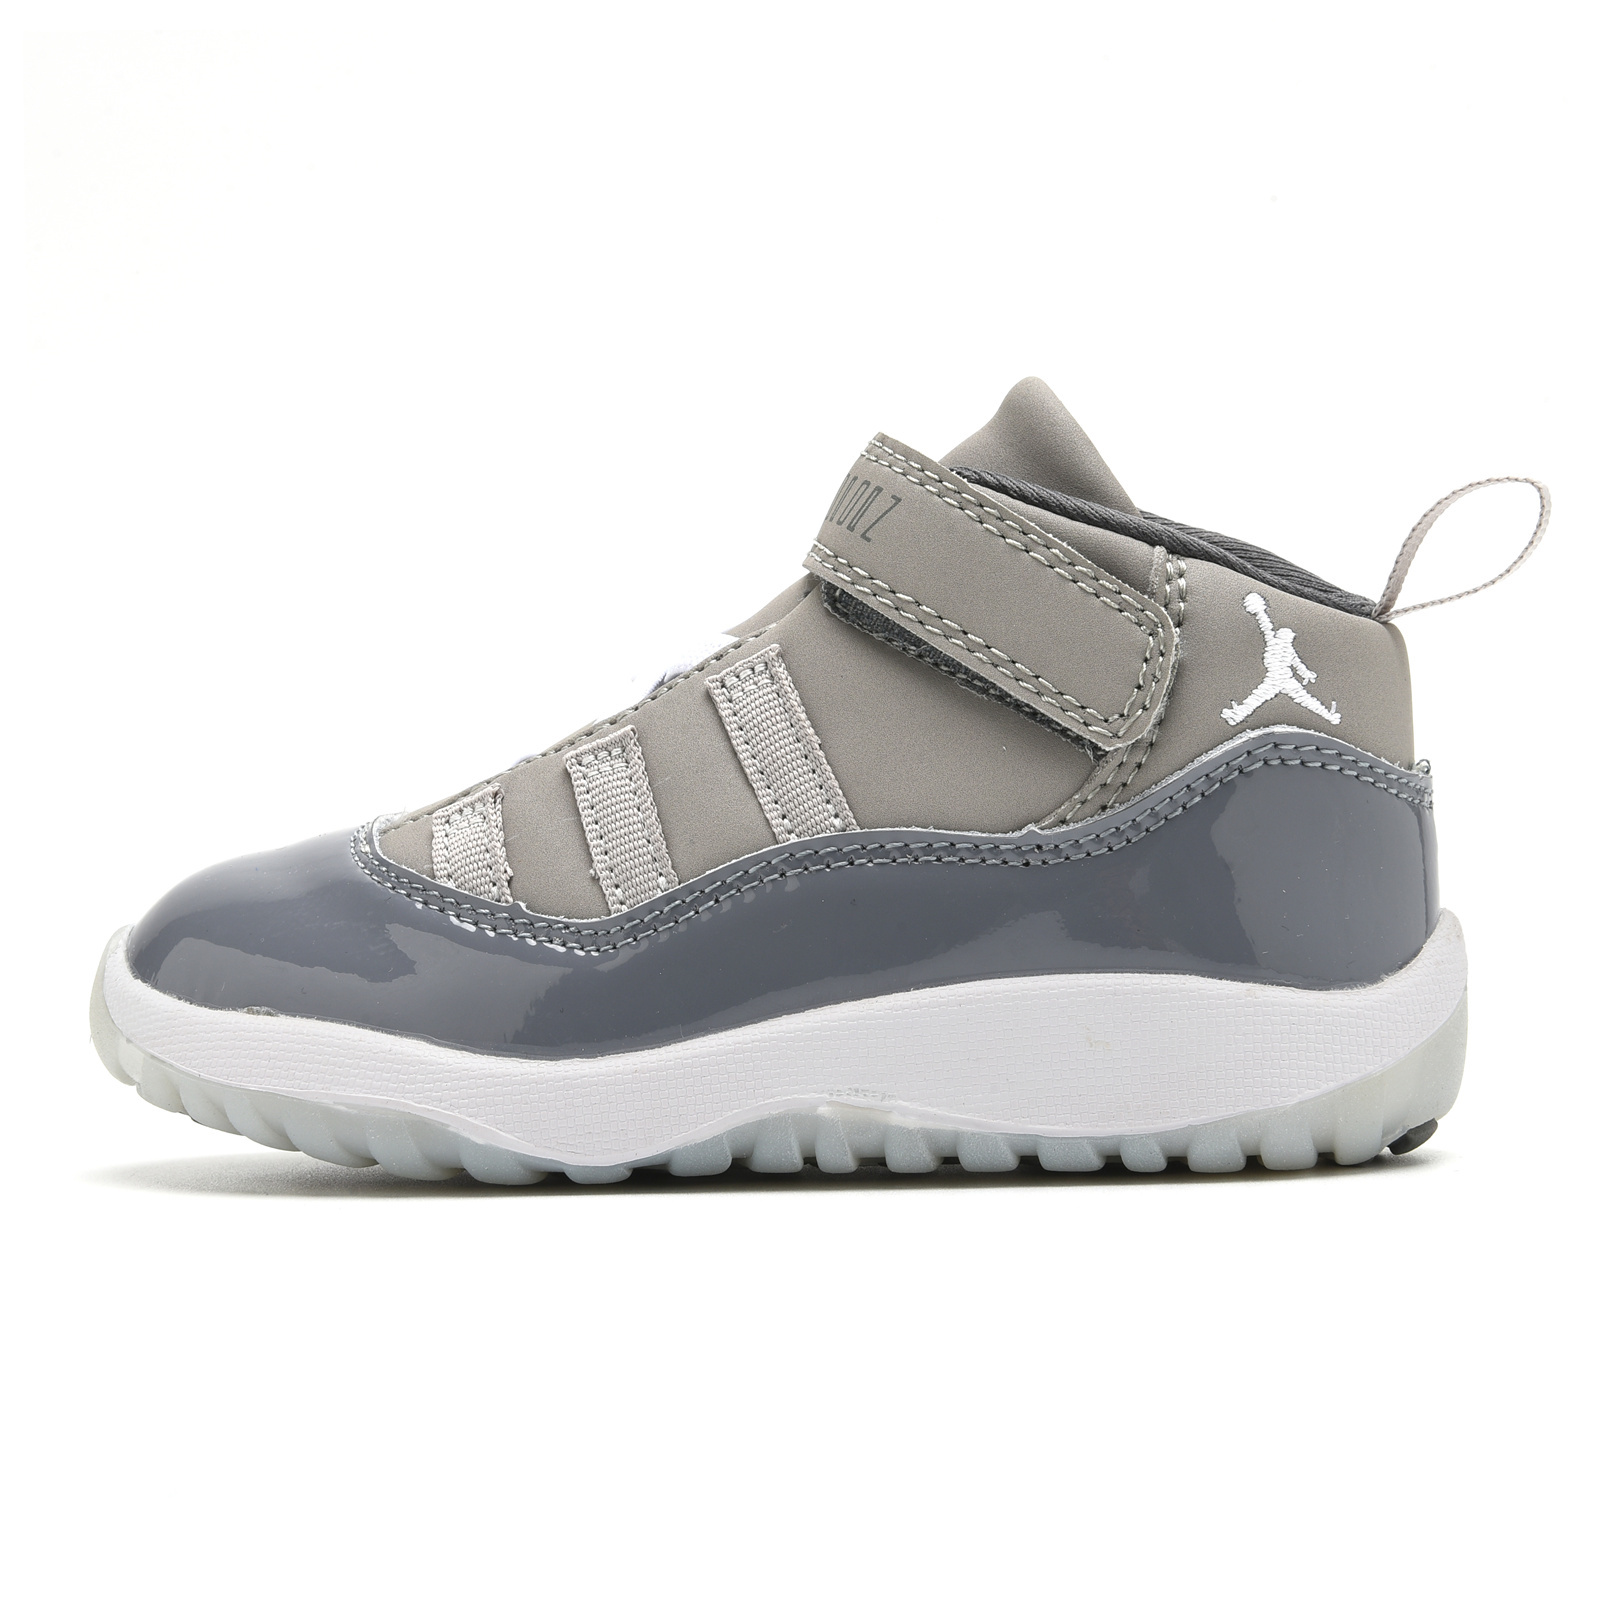 Youth Running Weapon Air Jordan 11 Grey Shoes 028